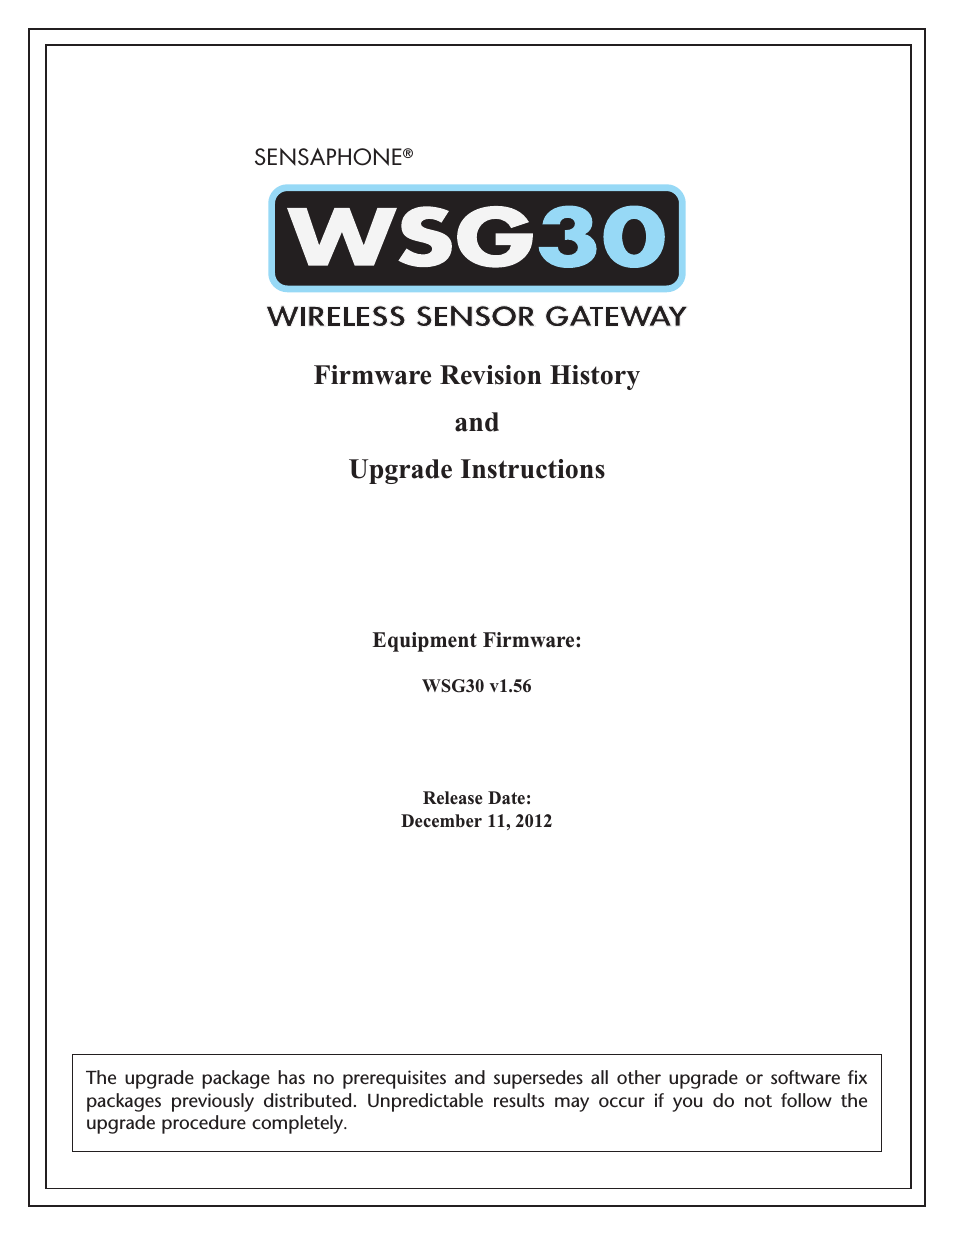 WSG30 Upgrade instructions